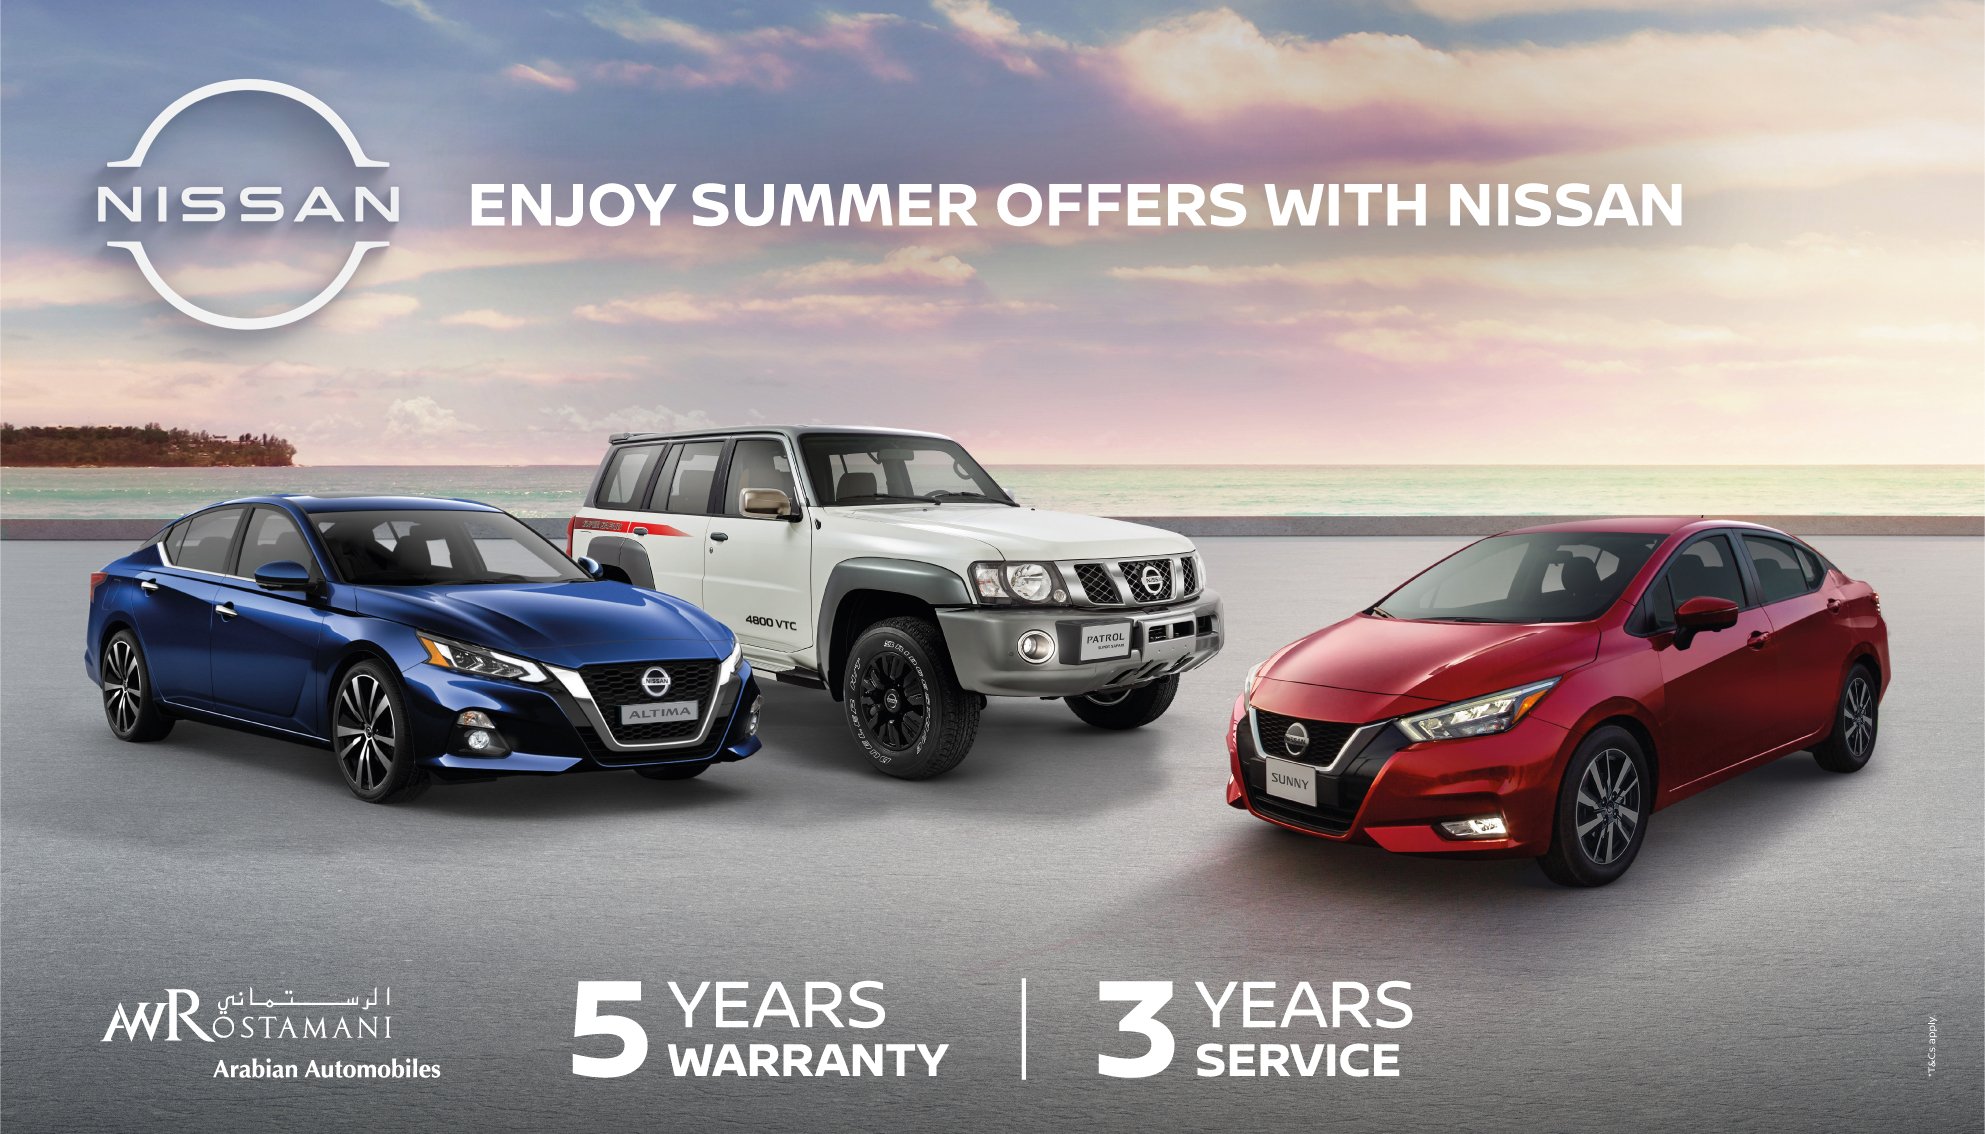 Arabian Automobiles brings special deals across Nissan, INFINITI and Renault during this Dubai Summer Surprises